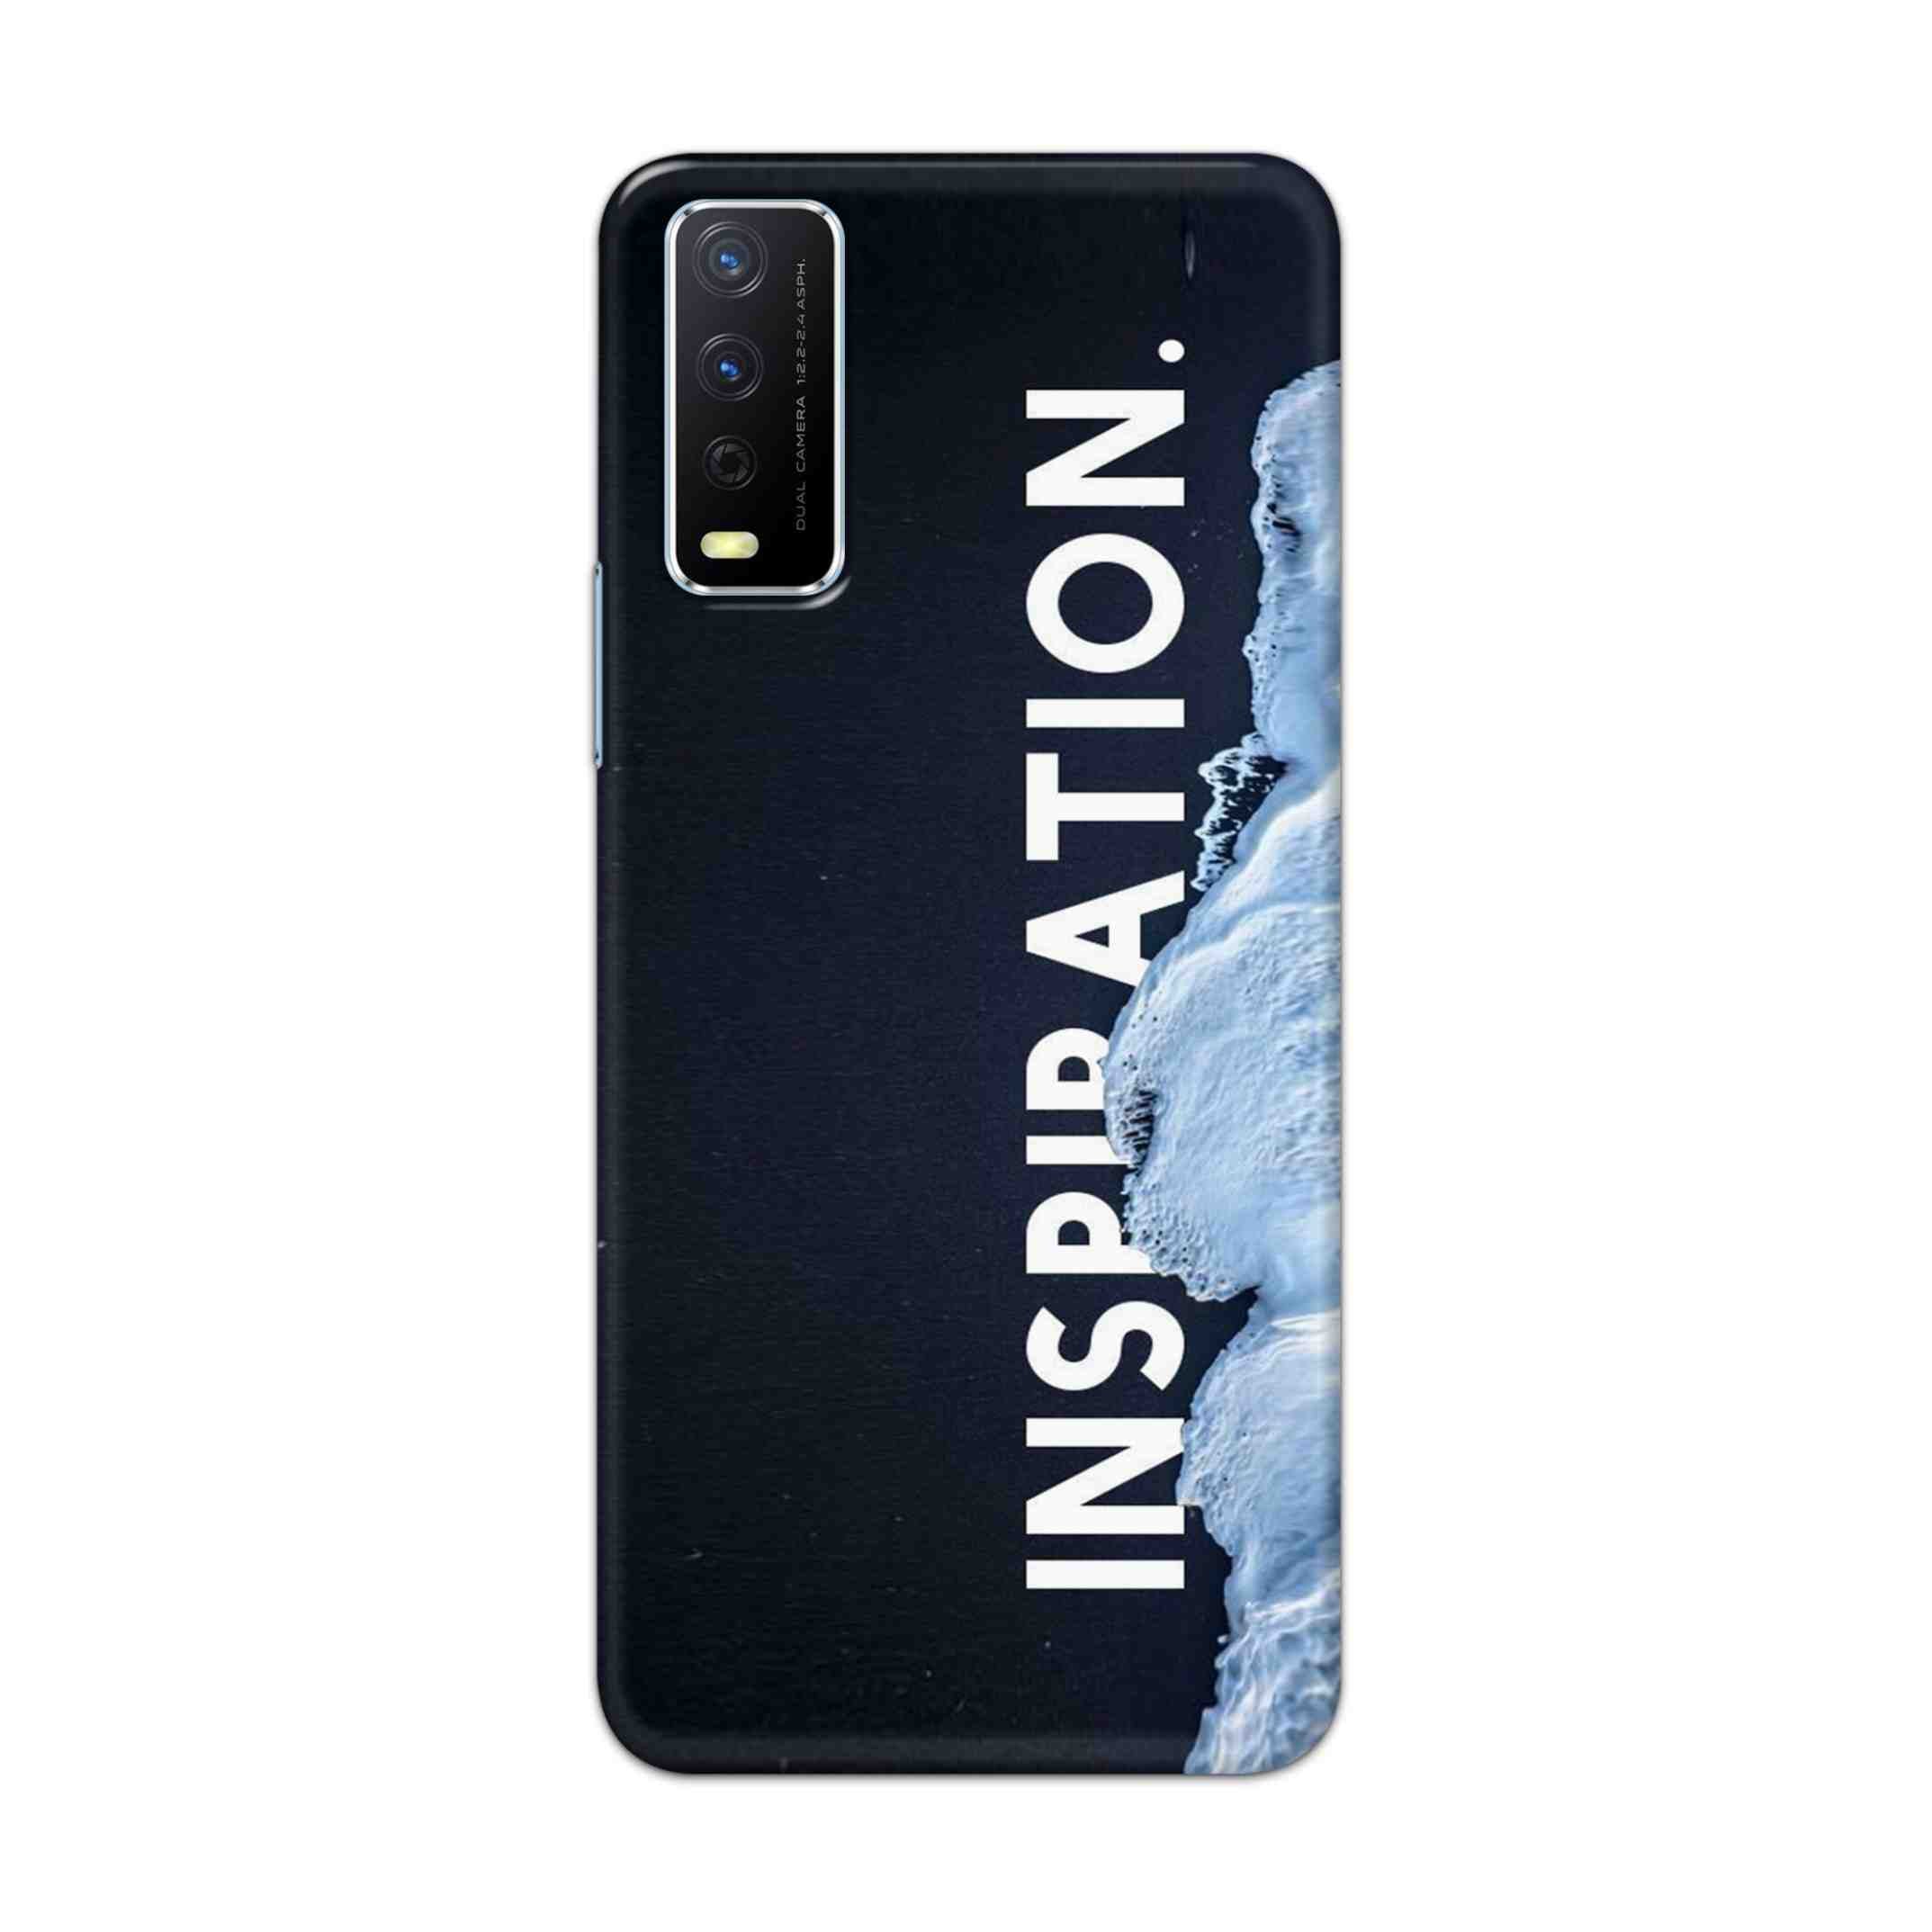 Buy Inspiration Hard Back Mobile Phone Case Cover For Vivo Y12s Online